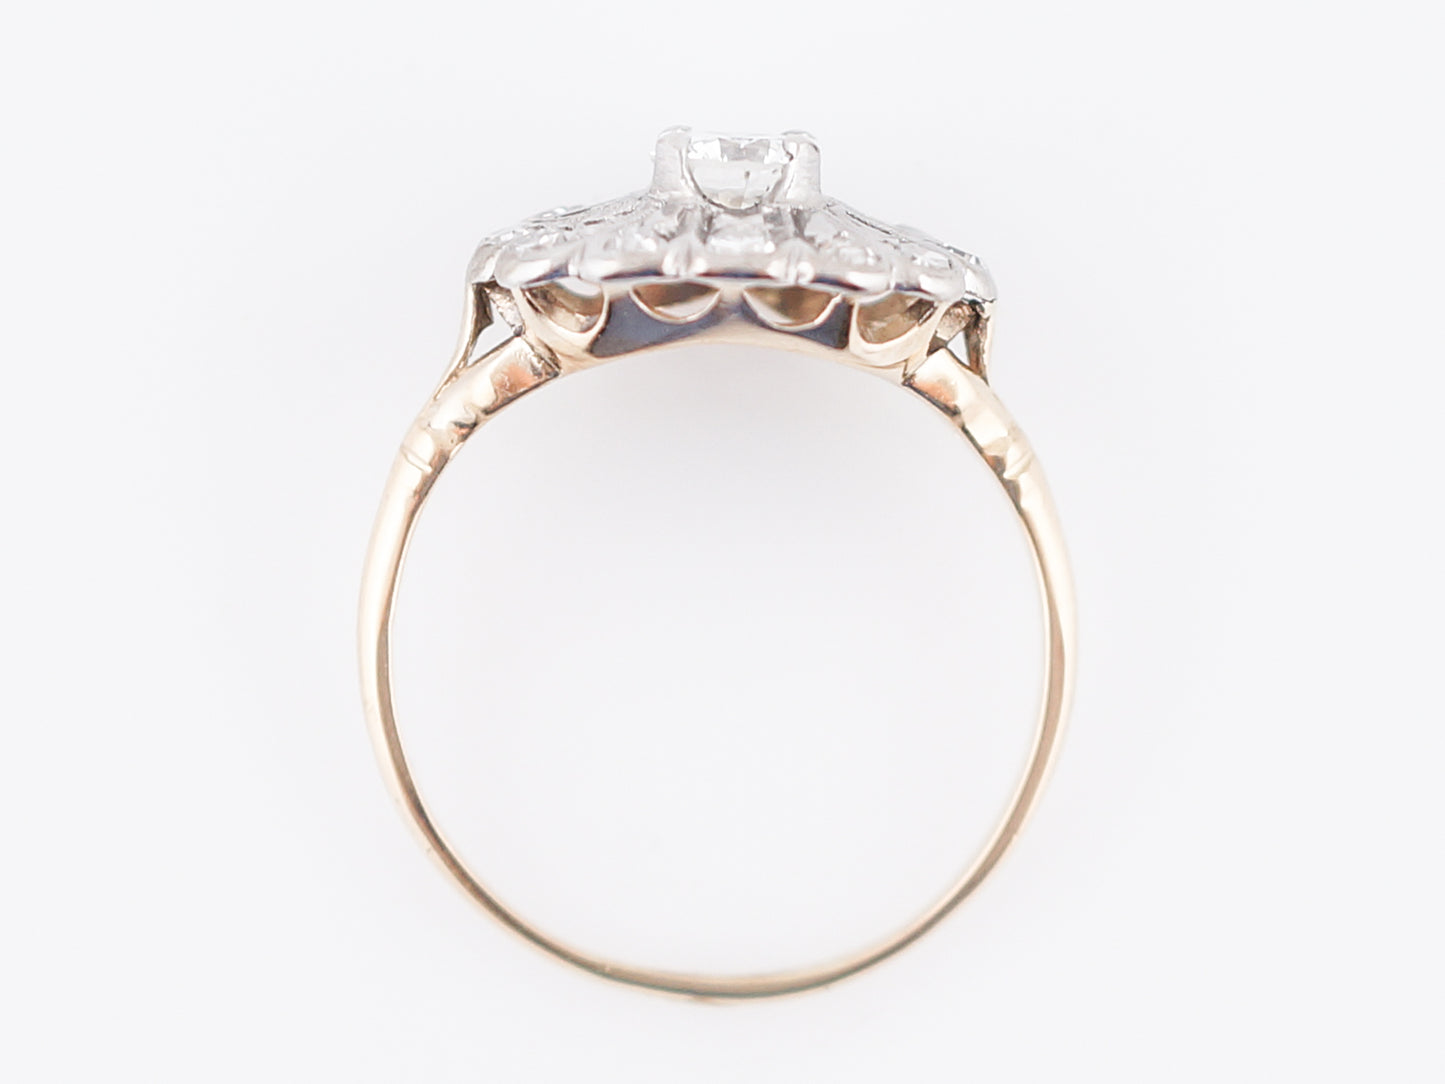 Antique Engagement Ring Retro .33 Round Brilliant Cut Diamond in 14k White & Yellow Gold